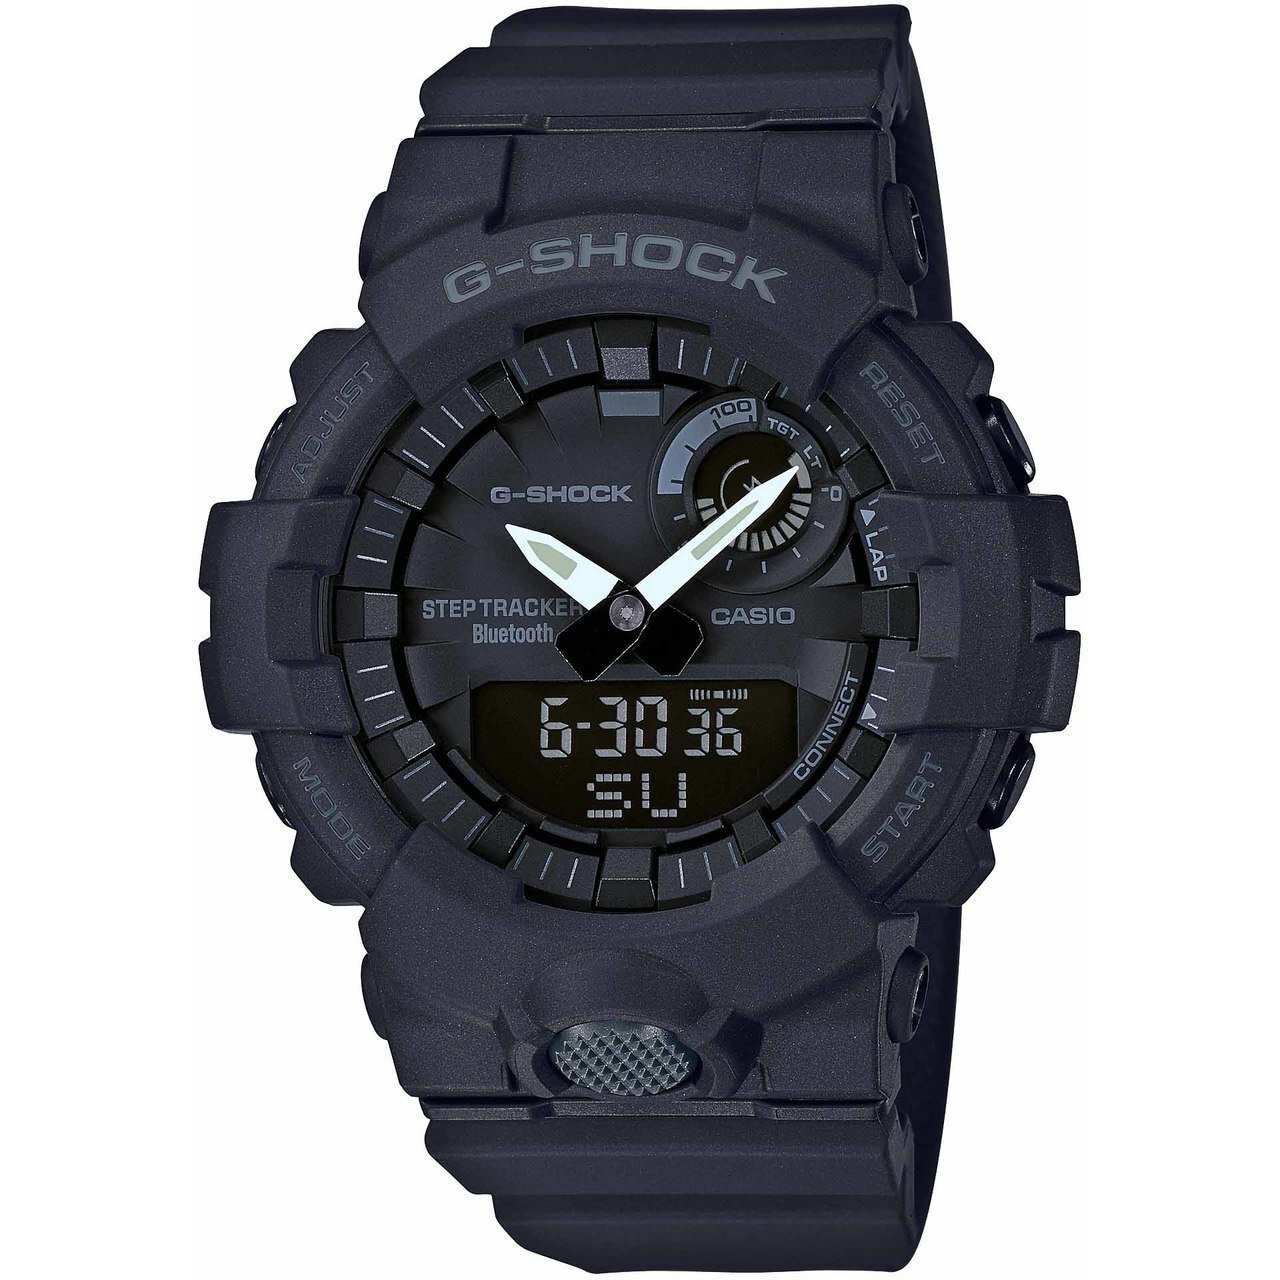 G-Shock GBA800 Bluetooth Step Tracker Training Timer Black